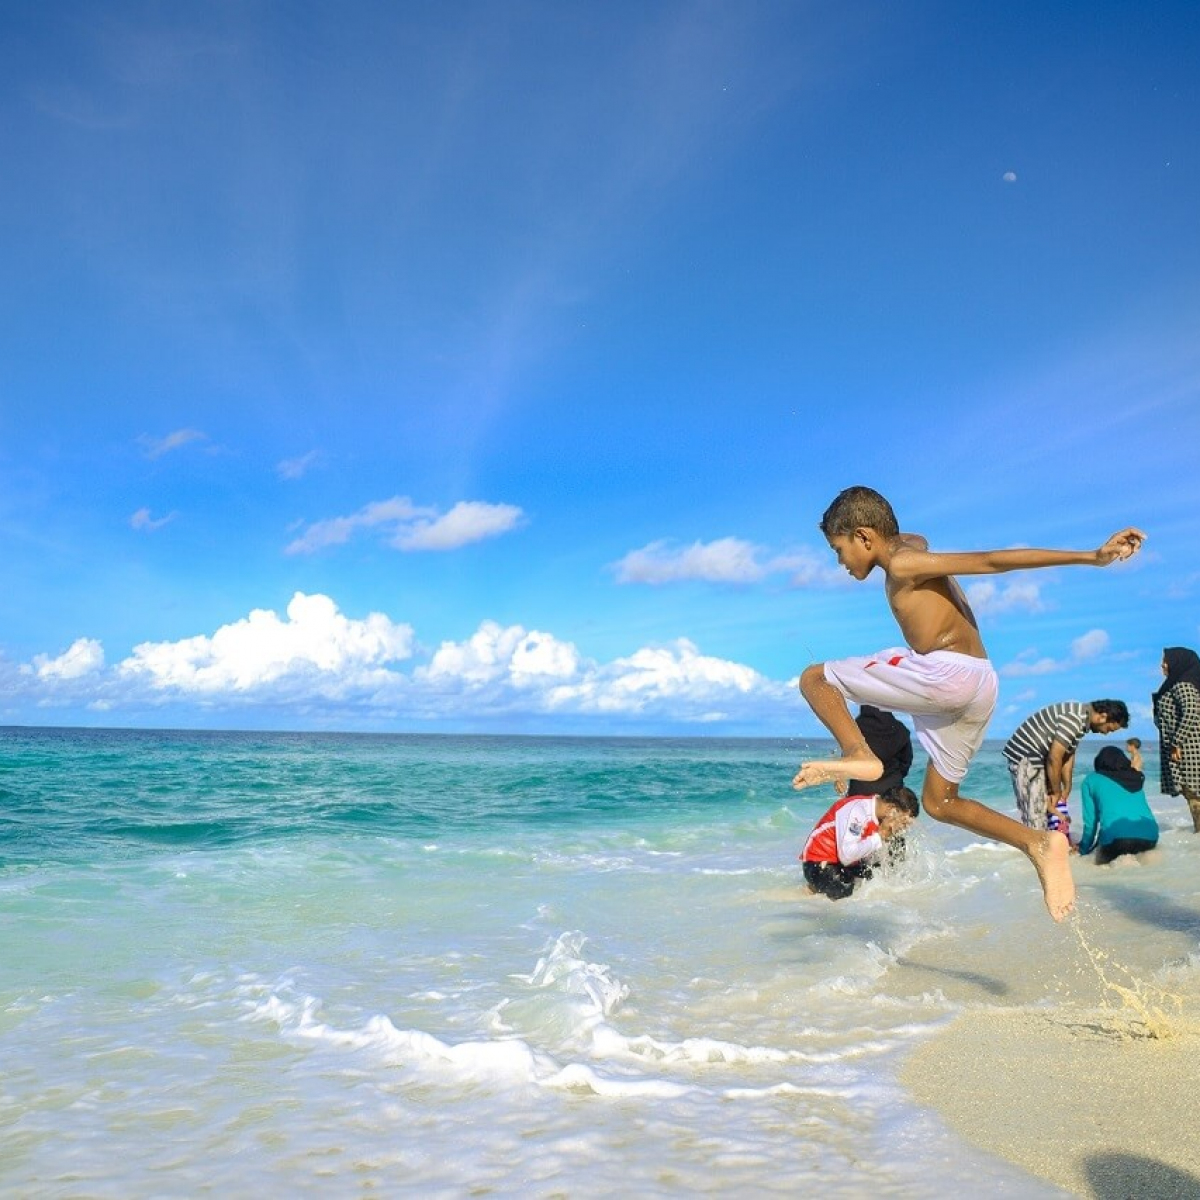 Local island. Мальдивы плюсы и минусы отдыха. Пляж Thundi. Caribbean Travel. Косметичні новинки для літа і відпустки.